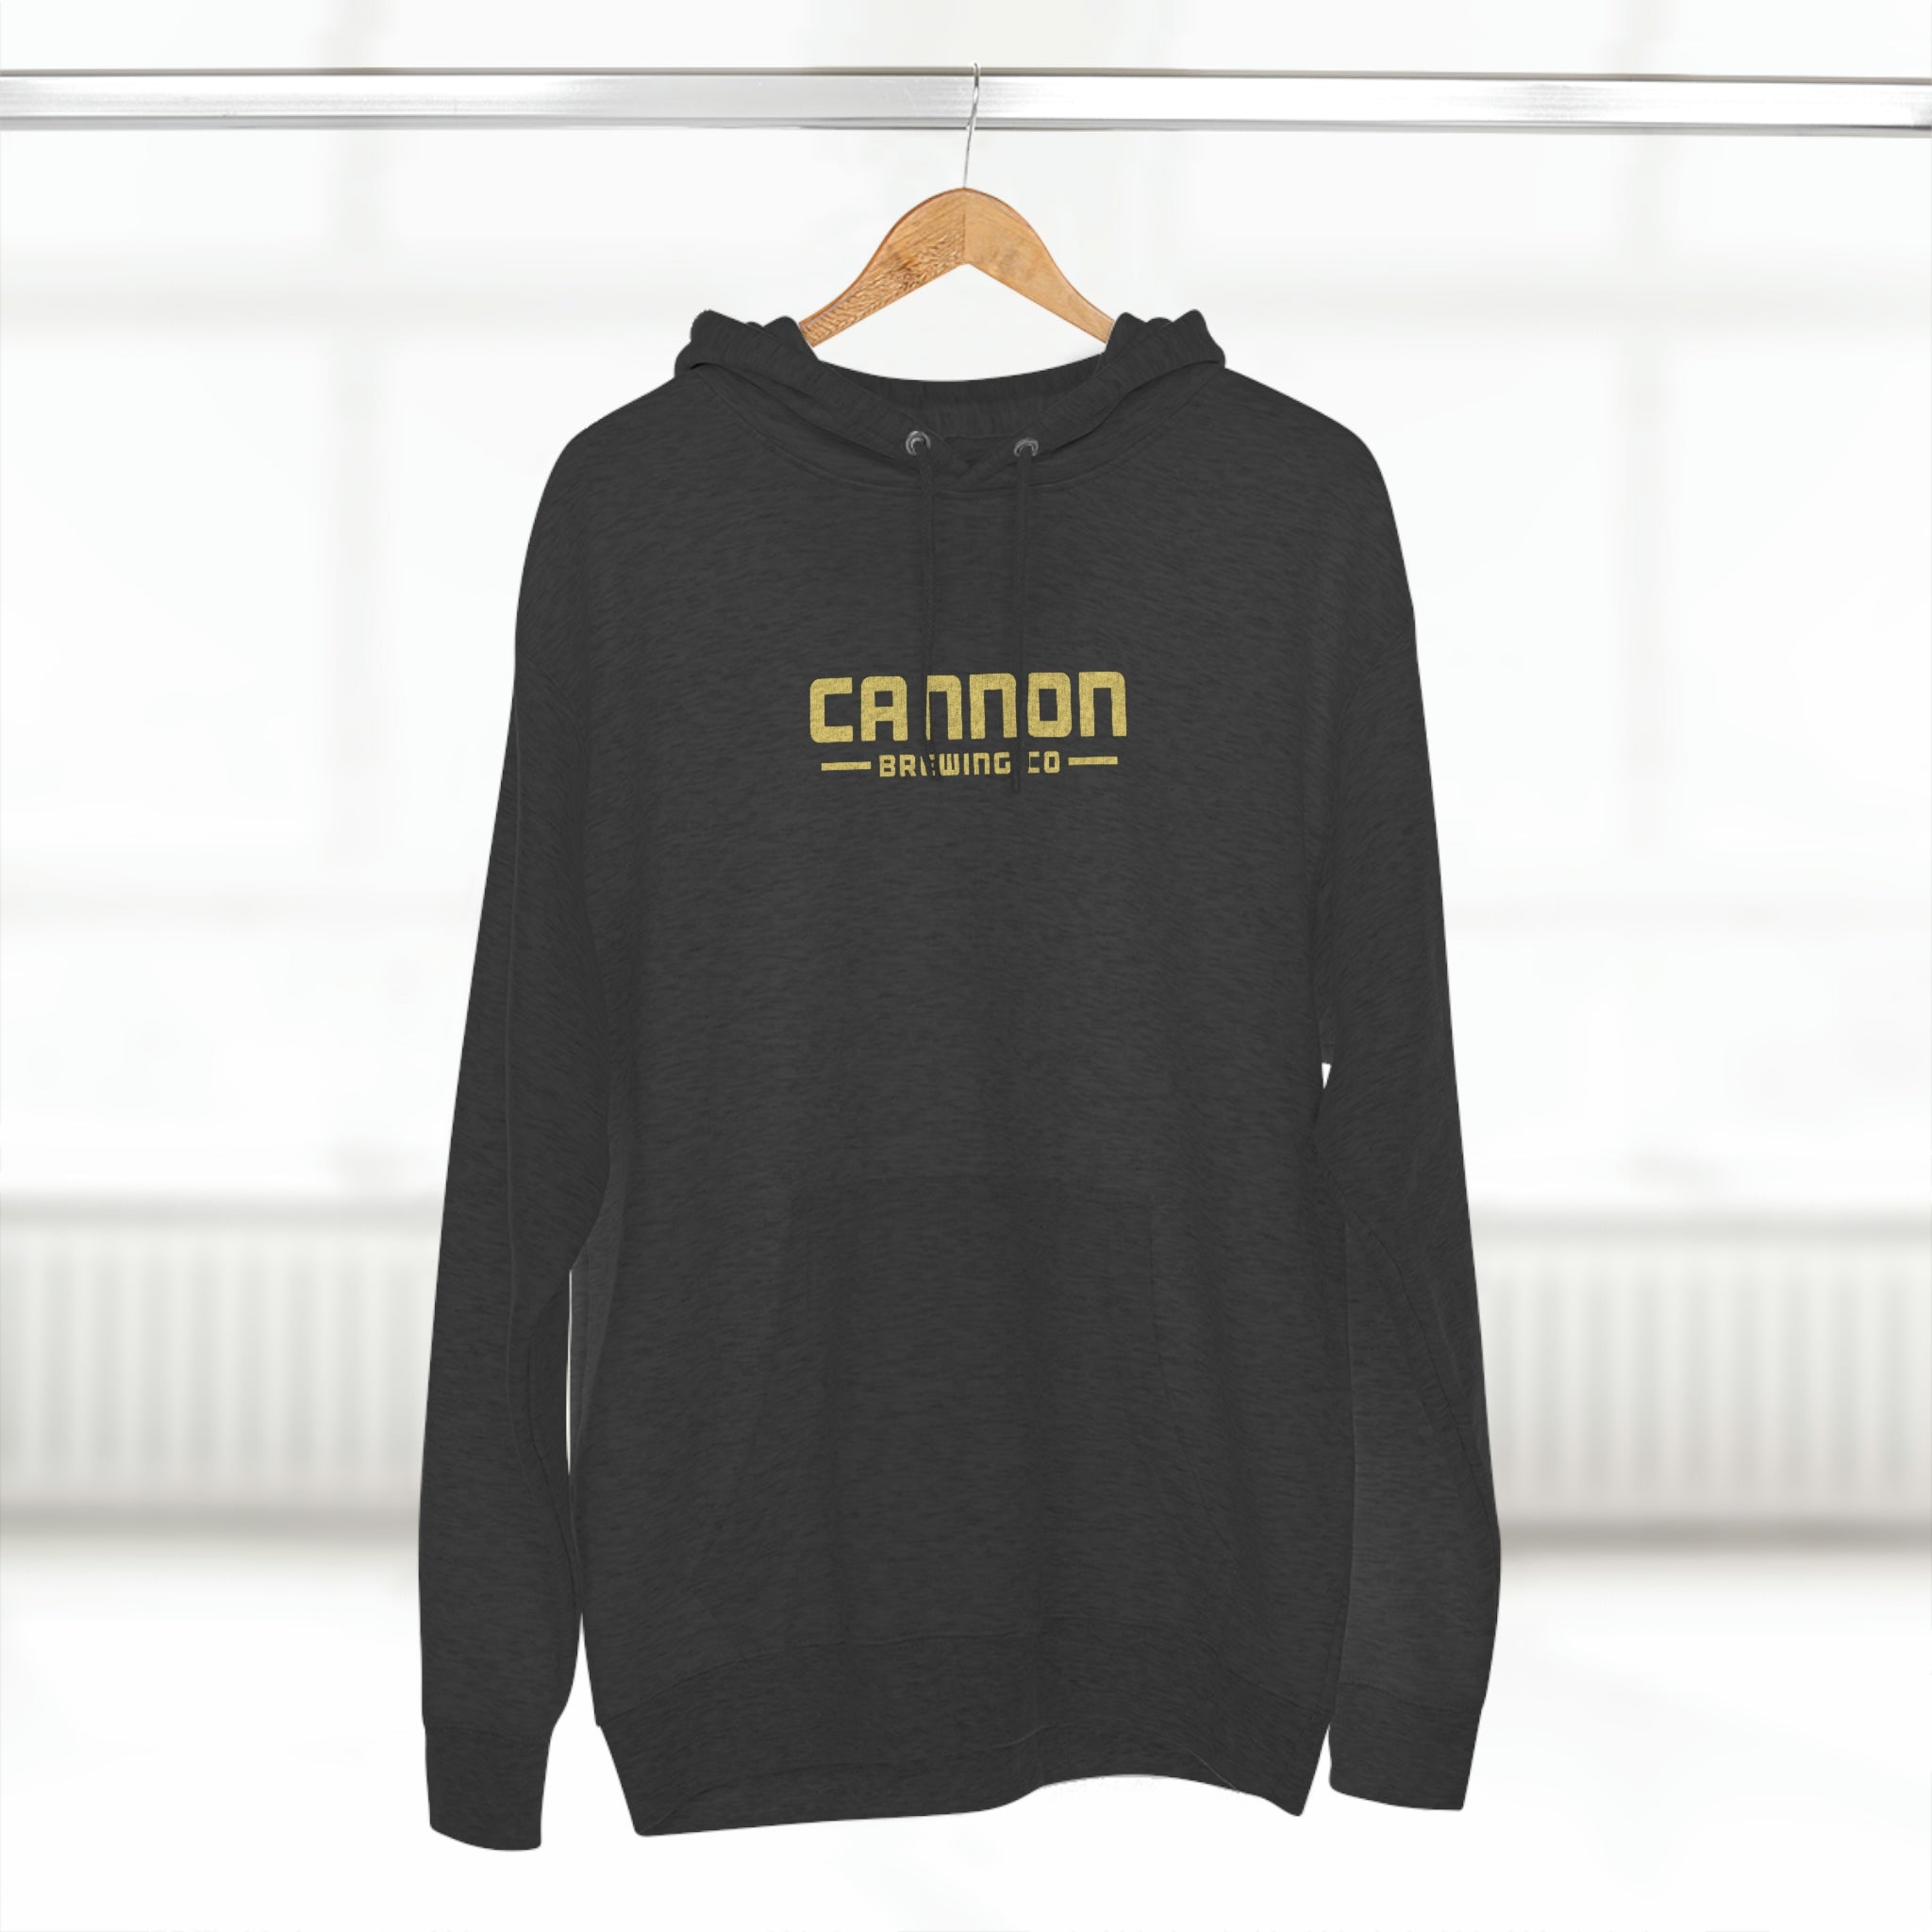 Cannon Brewing - Logo Centered - gold on dark or black on white - 80% cotton medium-heavy hoodie